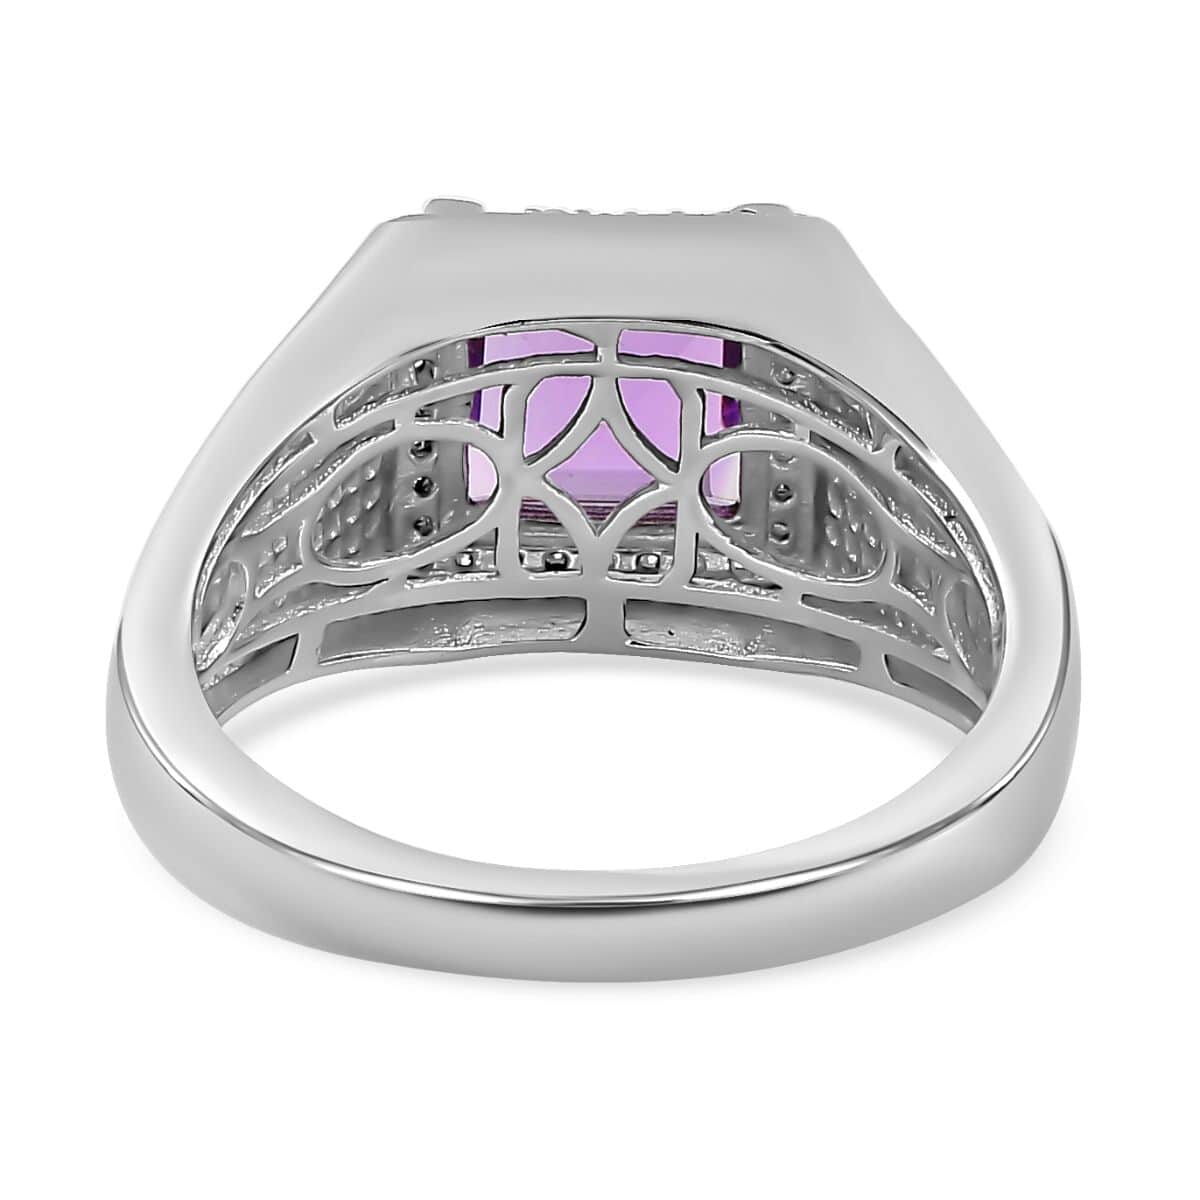 Premium Rose De France Amethyst and Moissanite Men's Ring in Platinum Over Sterling Silver (Size 9.0) 2.75 ctw image number 4